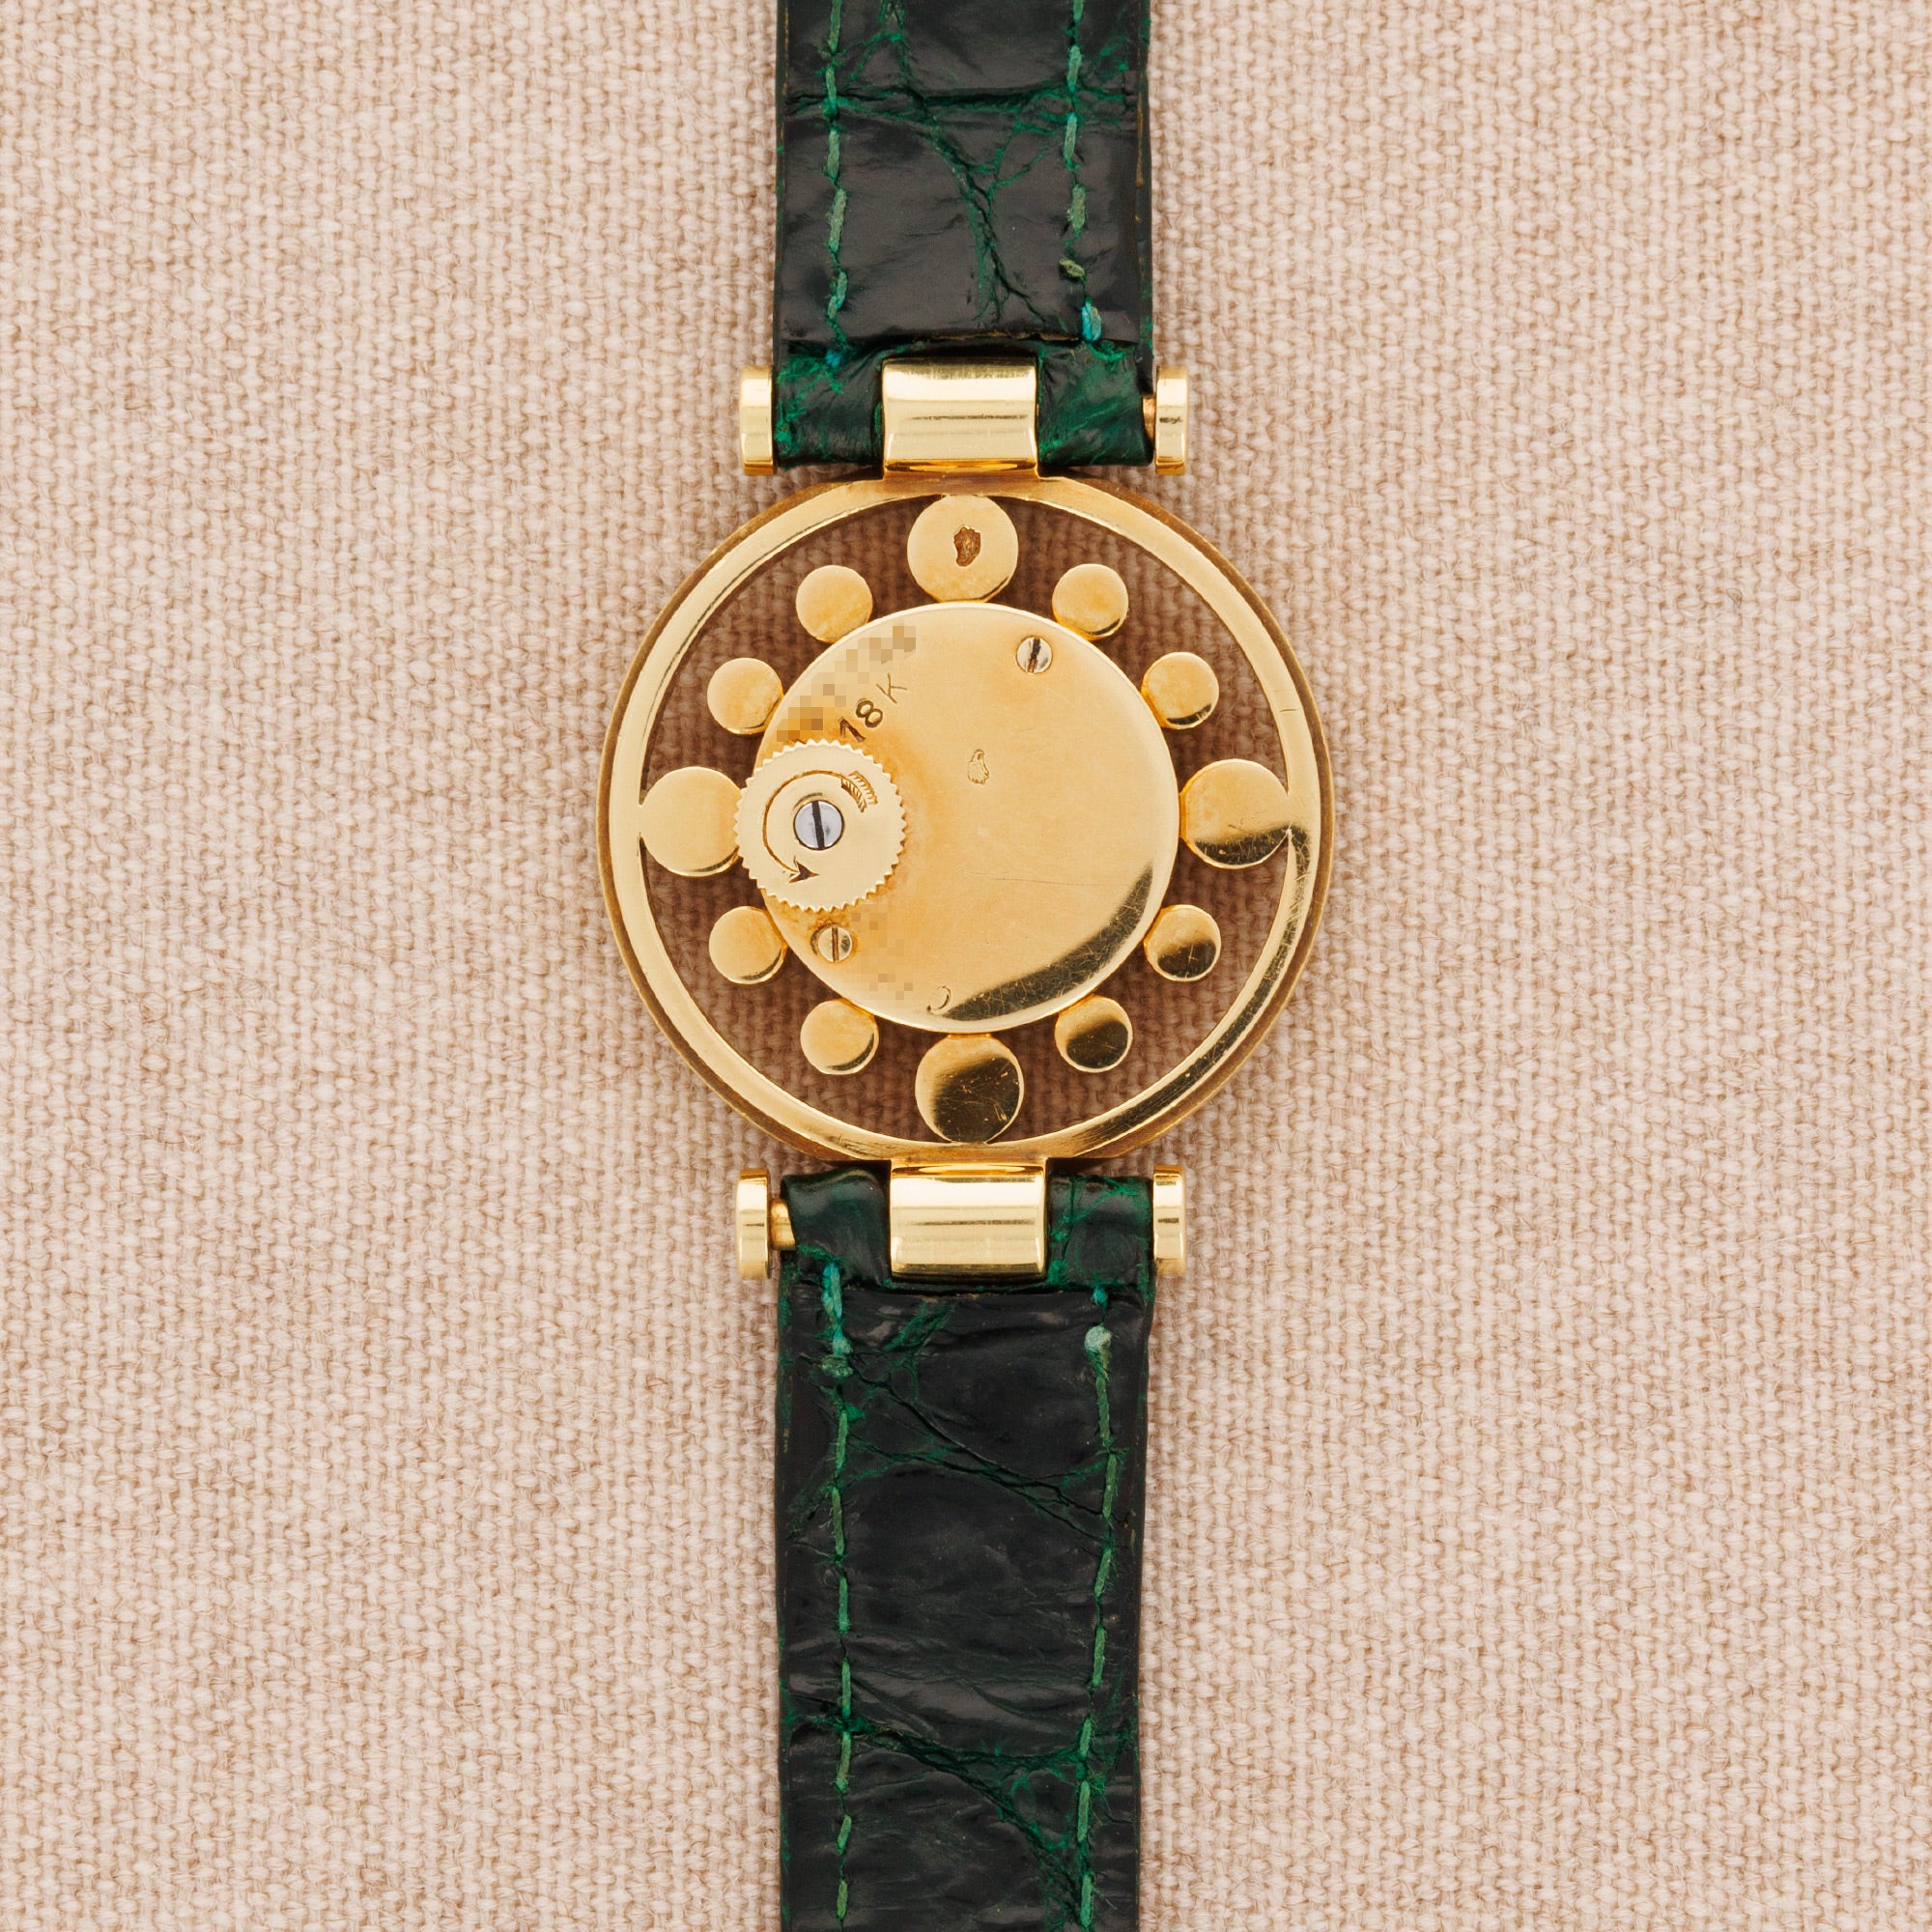 Cartier - Cartier Yellow Gold Helm Watch - The Keystone Watches